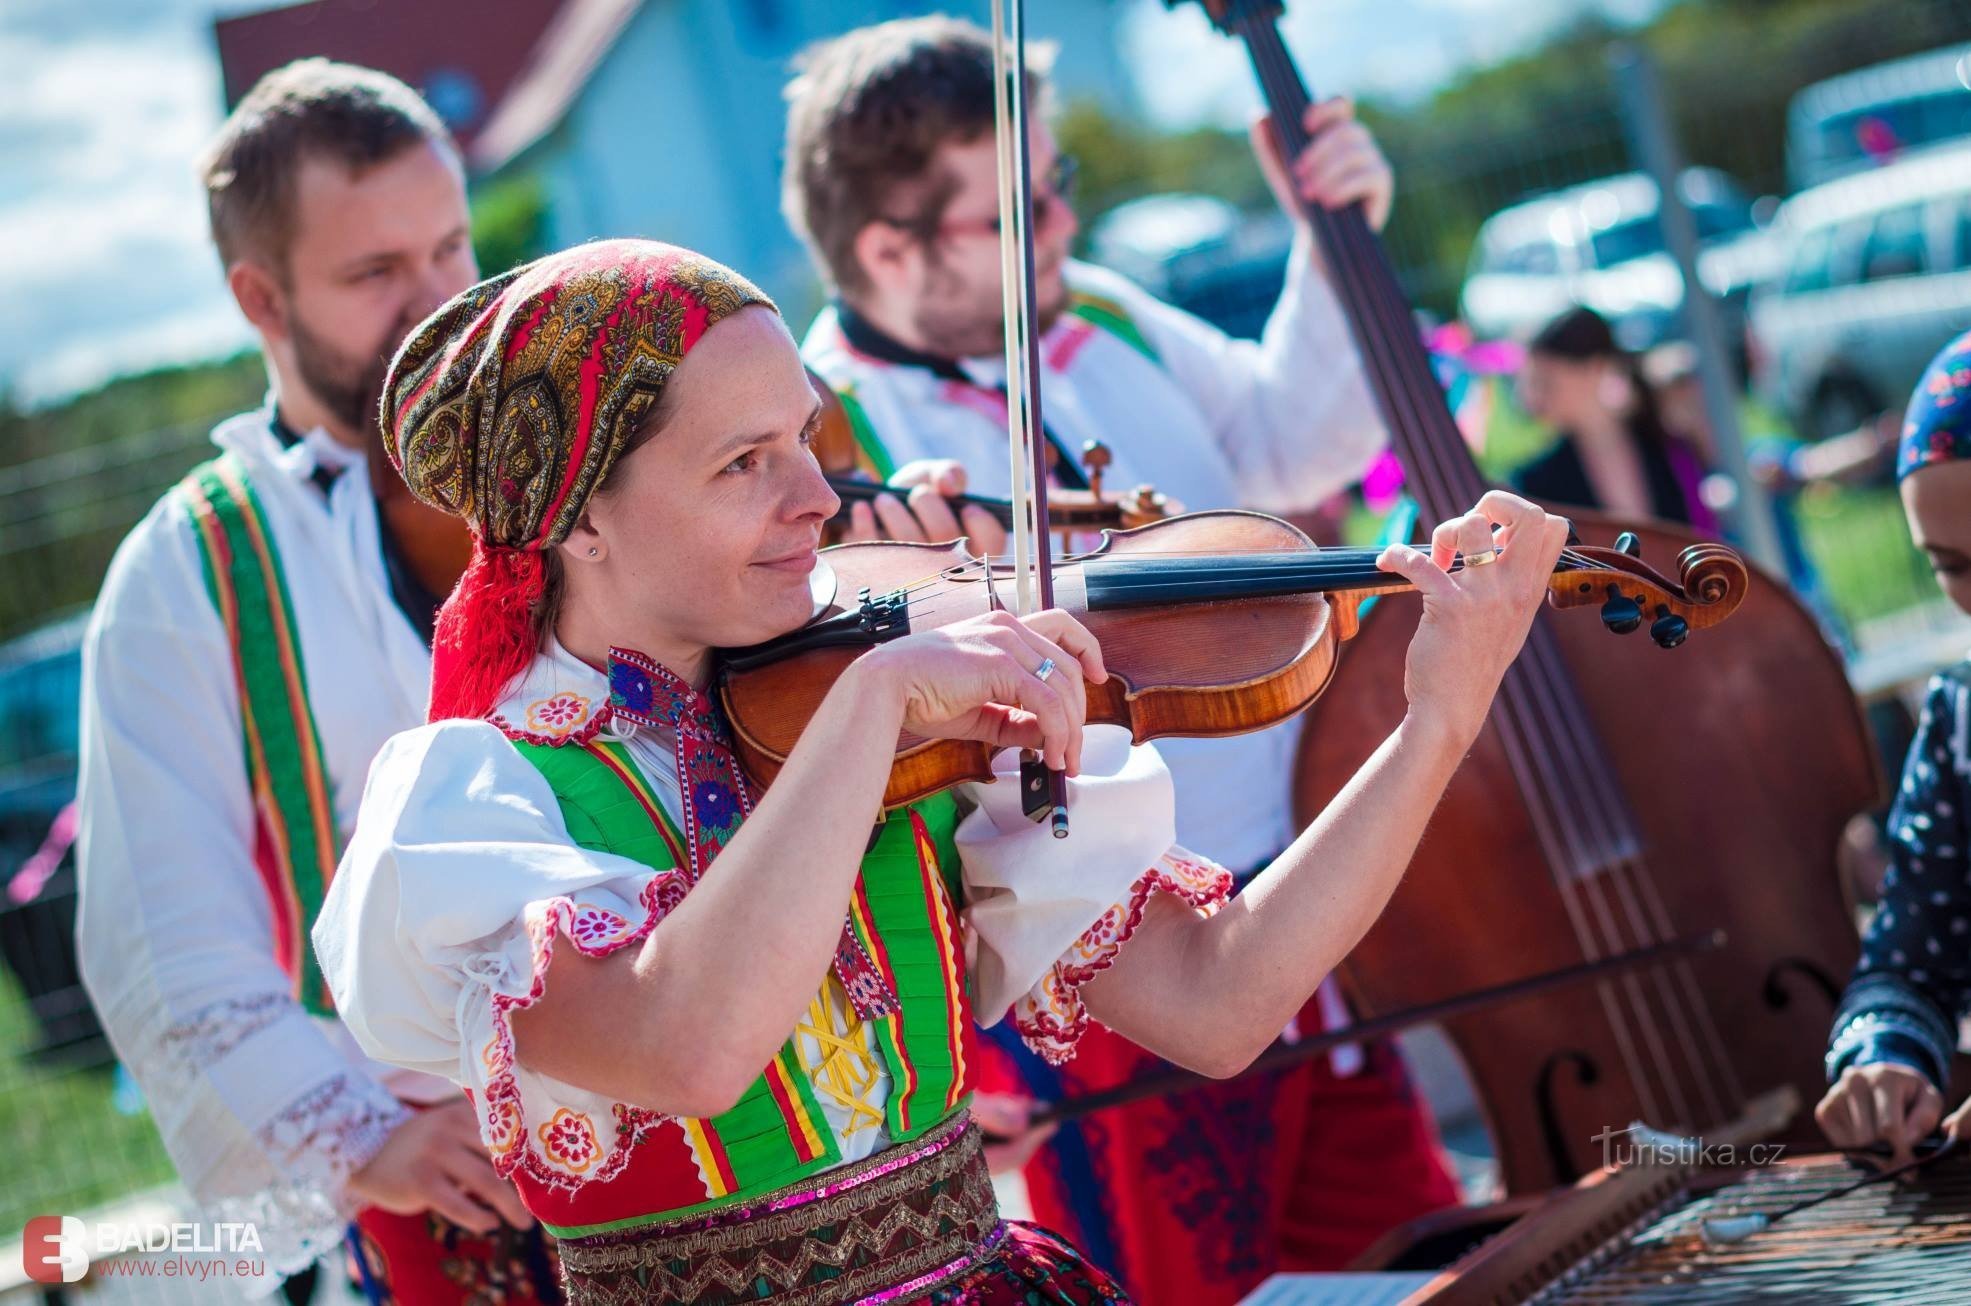 Kiritof - traditionel kroatisk fest